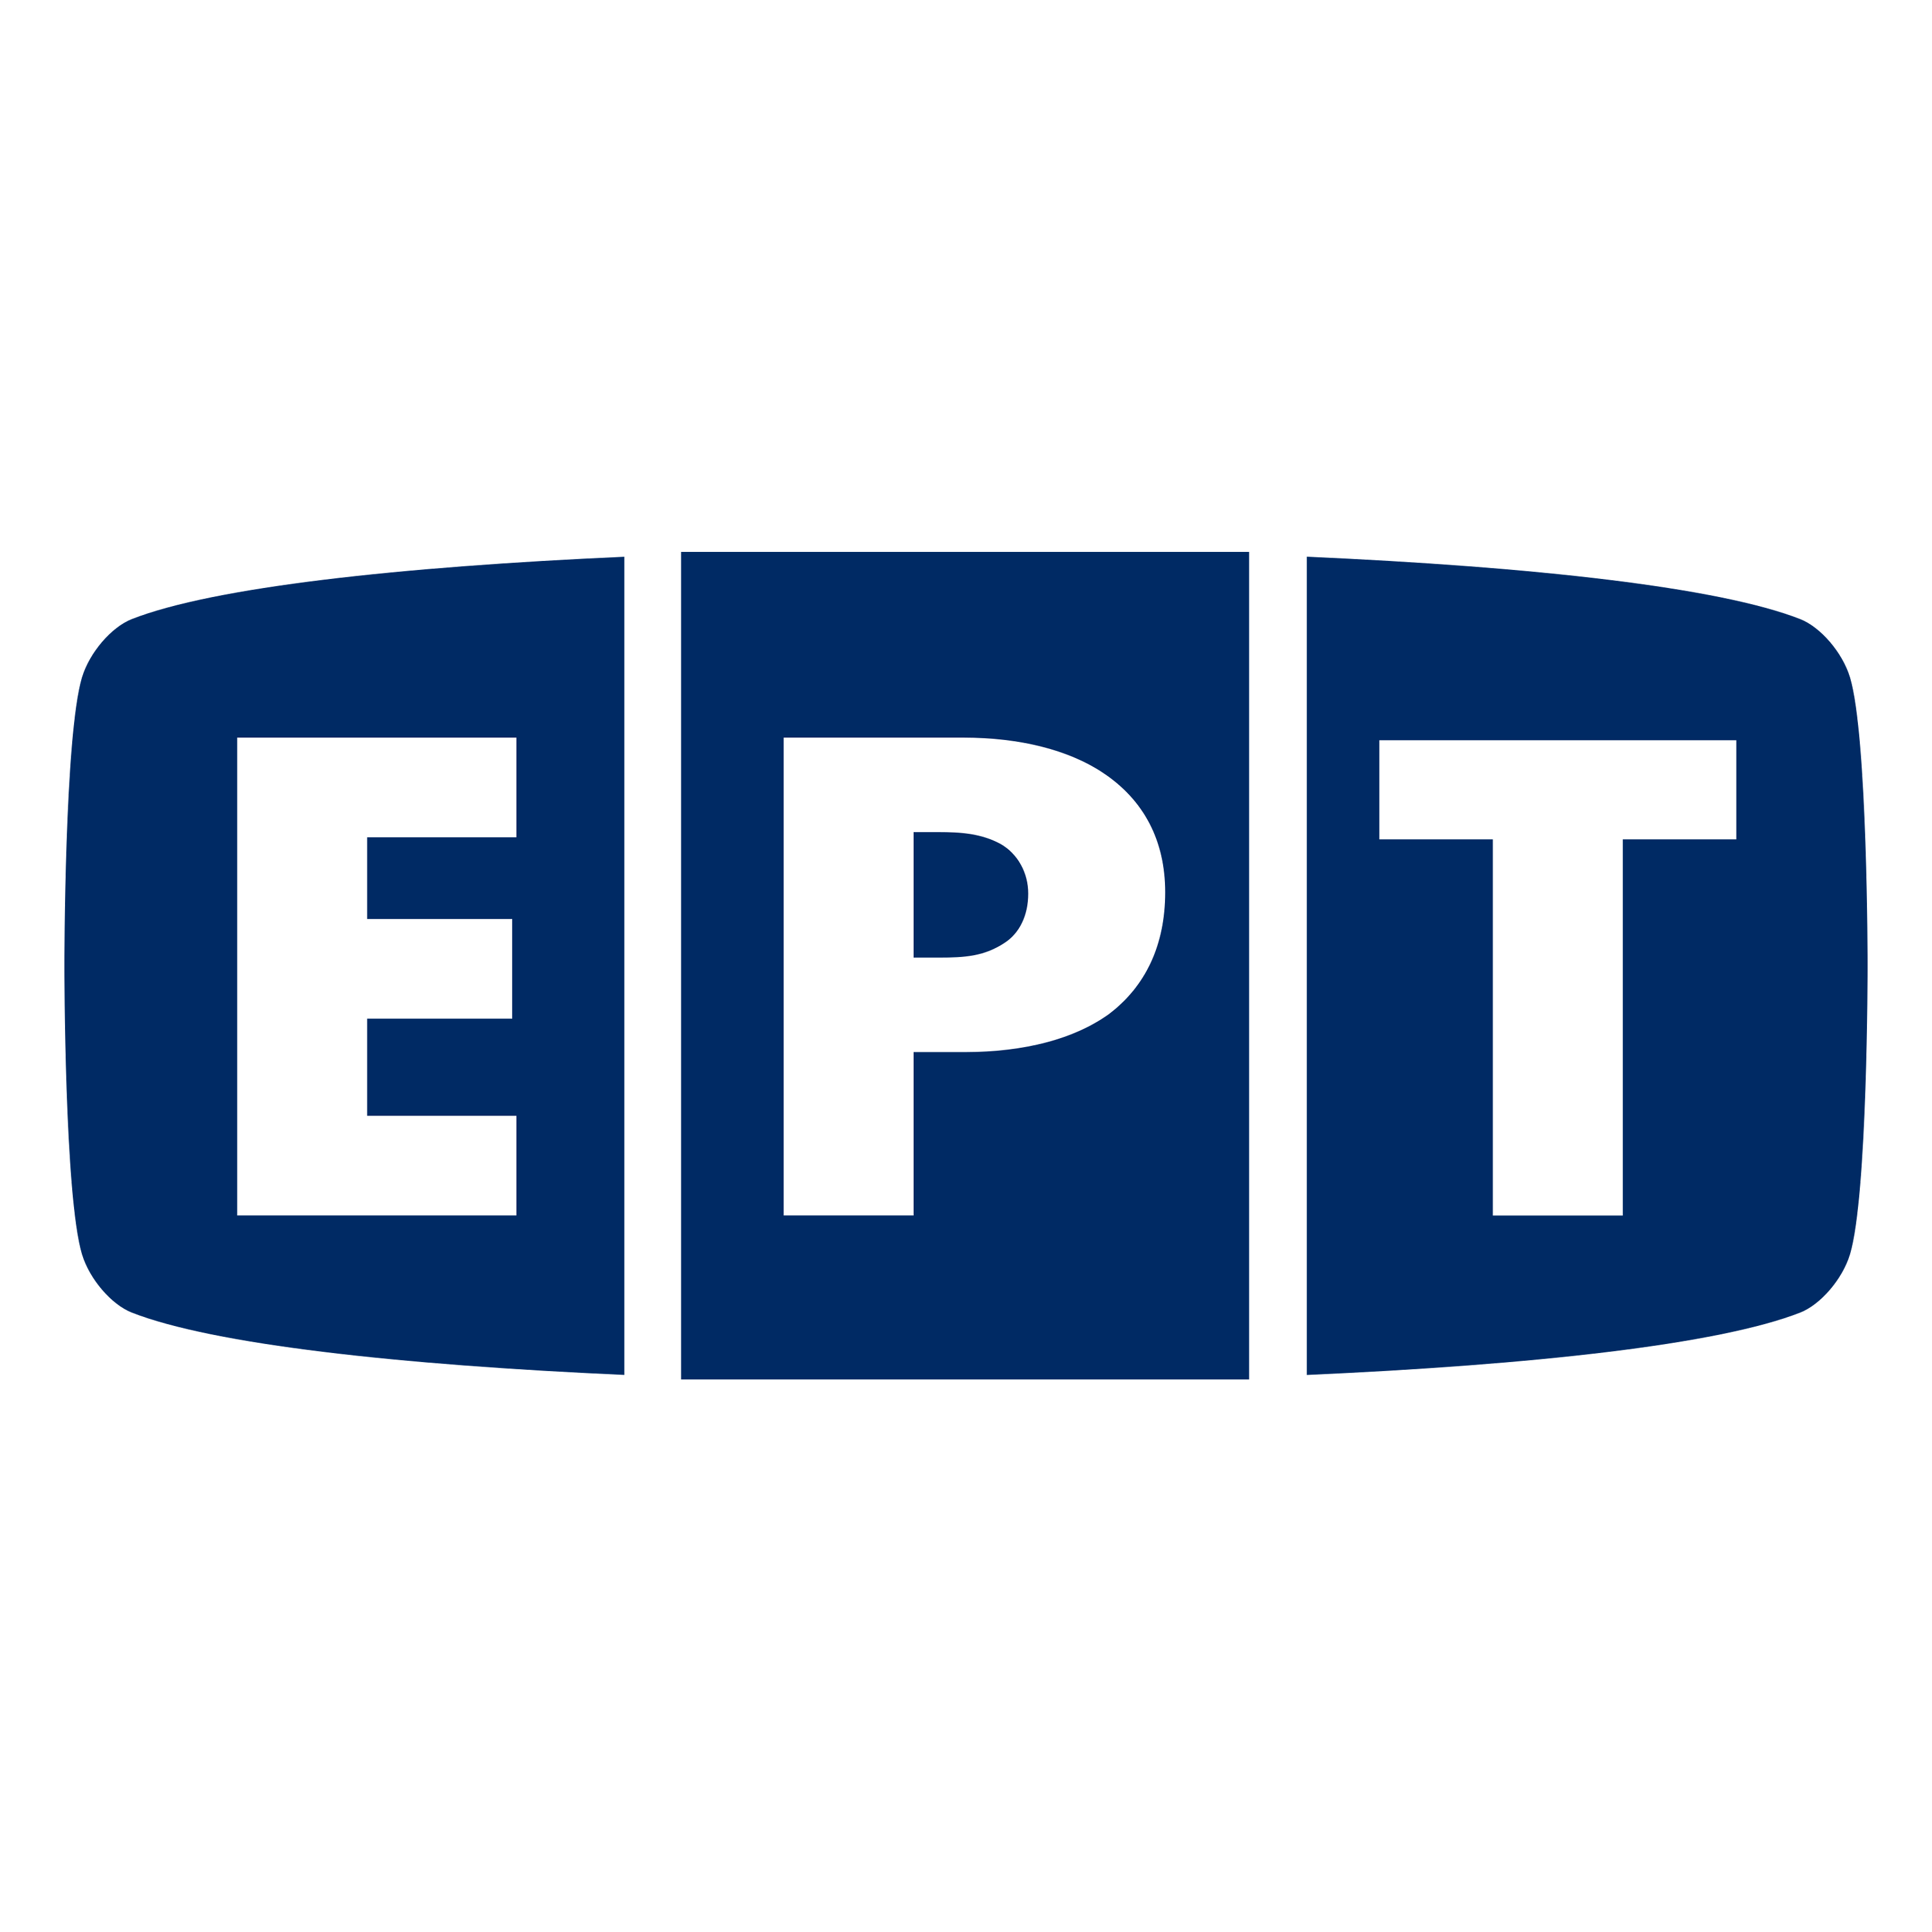 EPT Logo Transparent Image